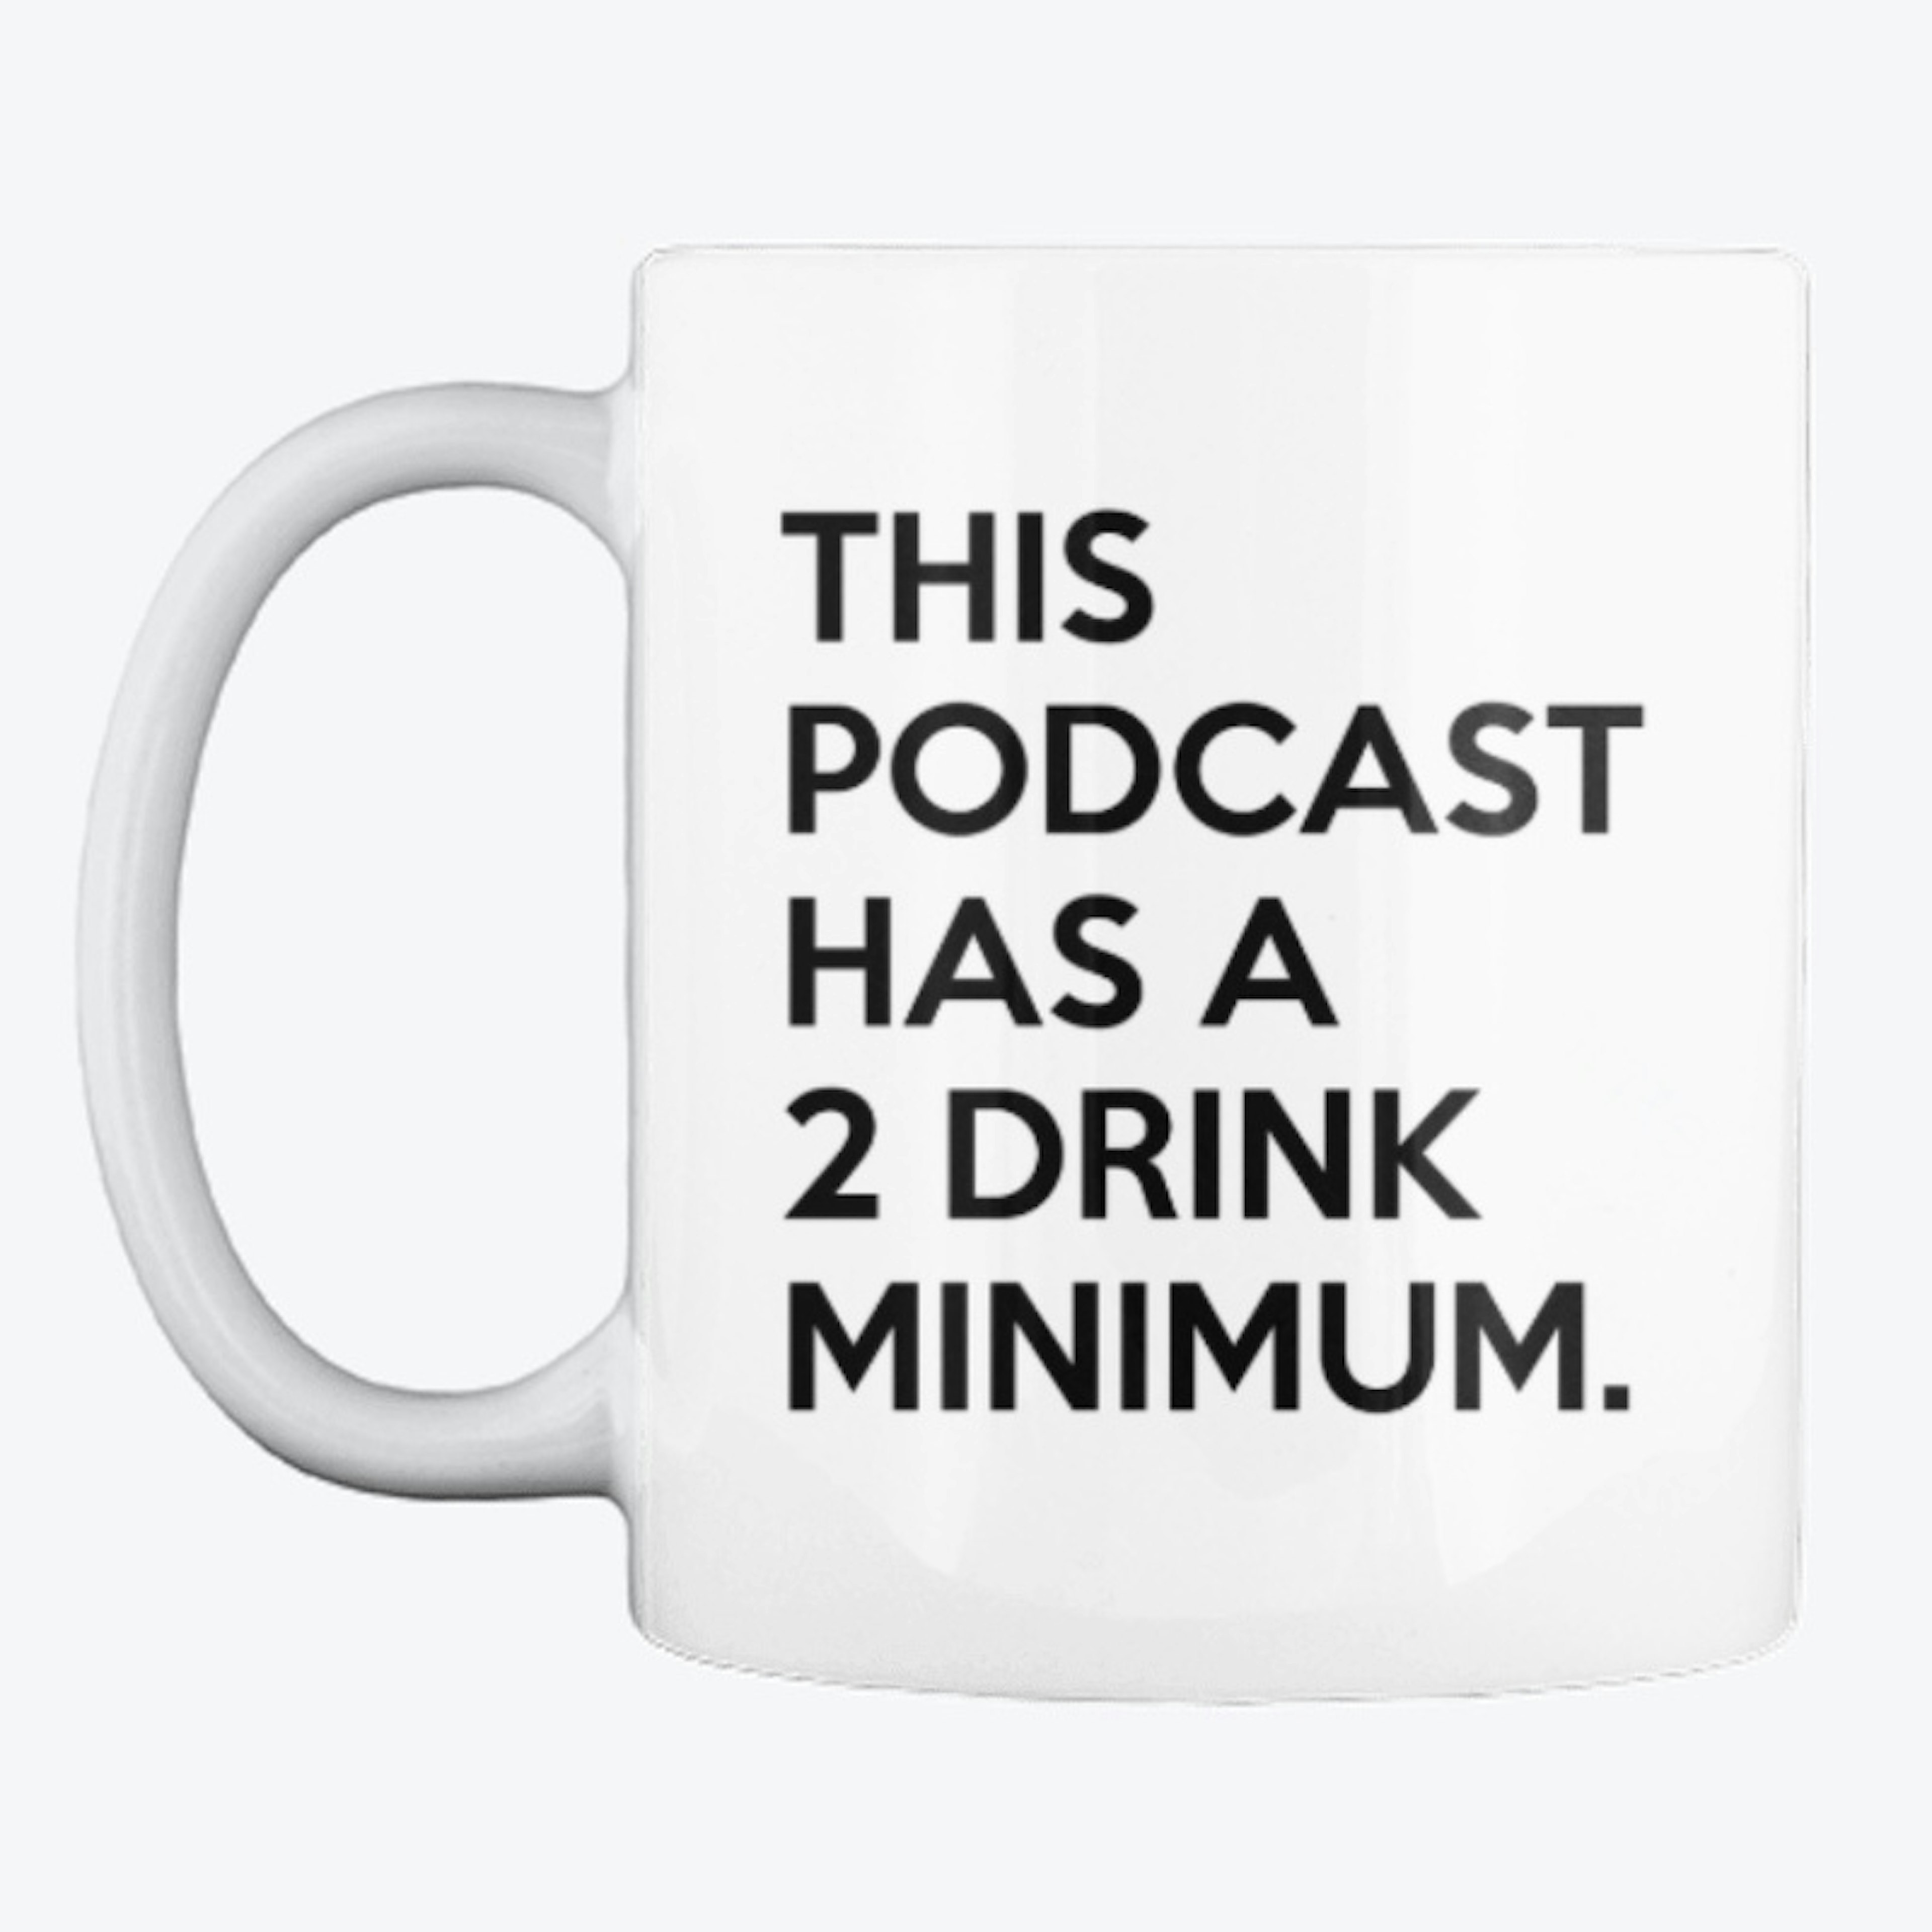 The 2 Drink Minimum Mug